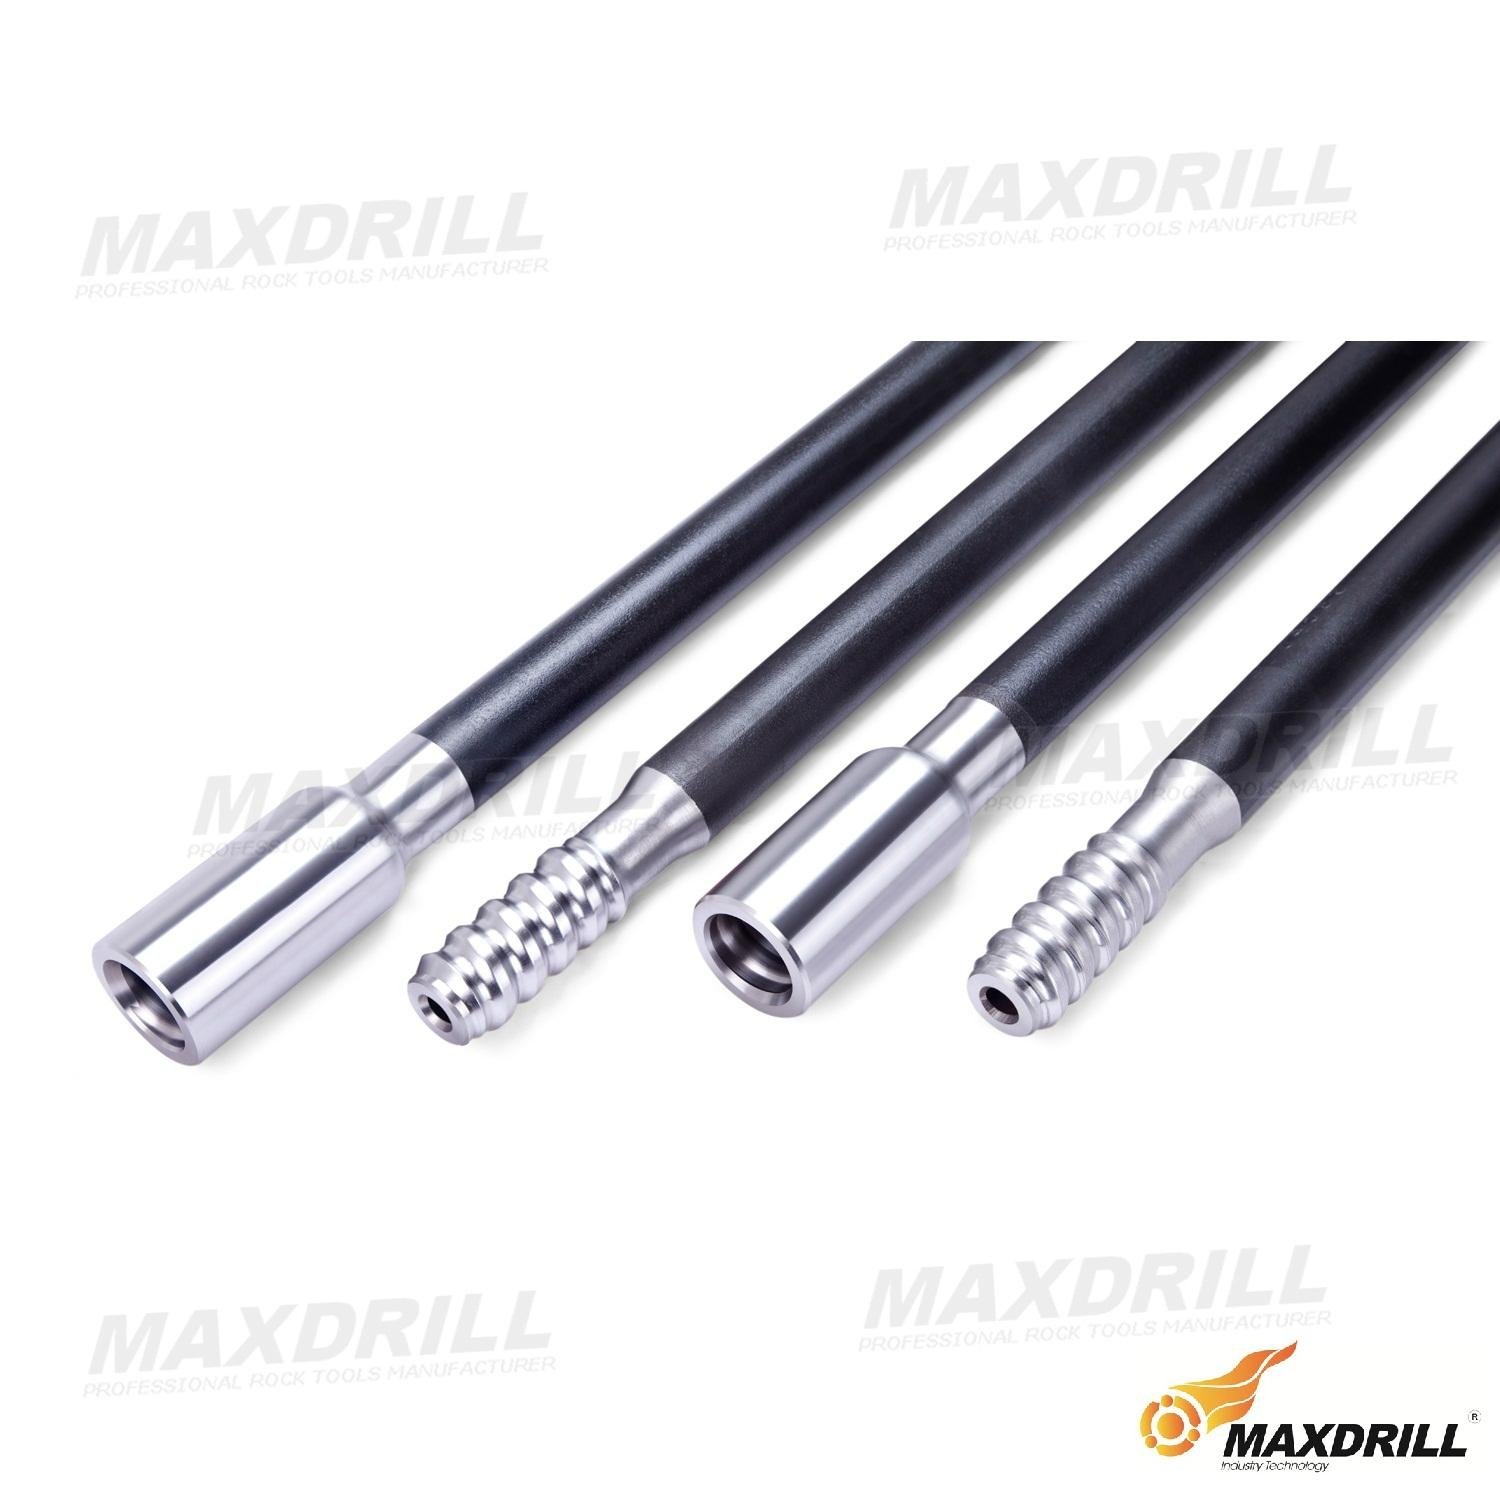 MAXDRILL drifting and extension drill rod 4